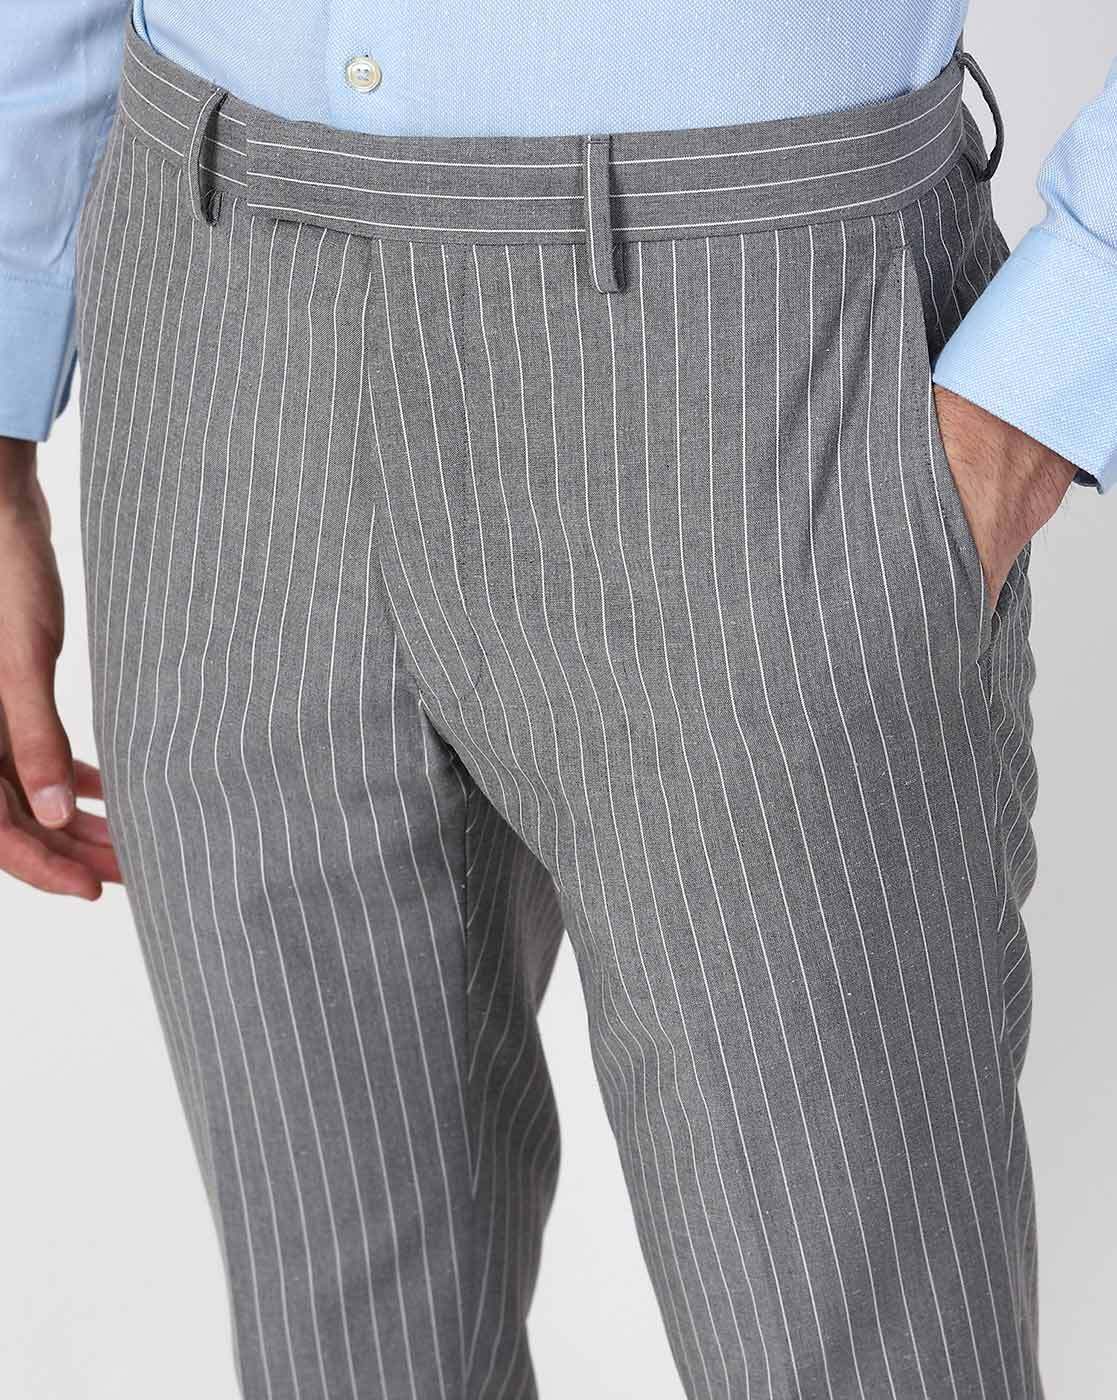 Amazon.com: Lars Amadeus: Striped Pants